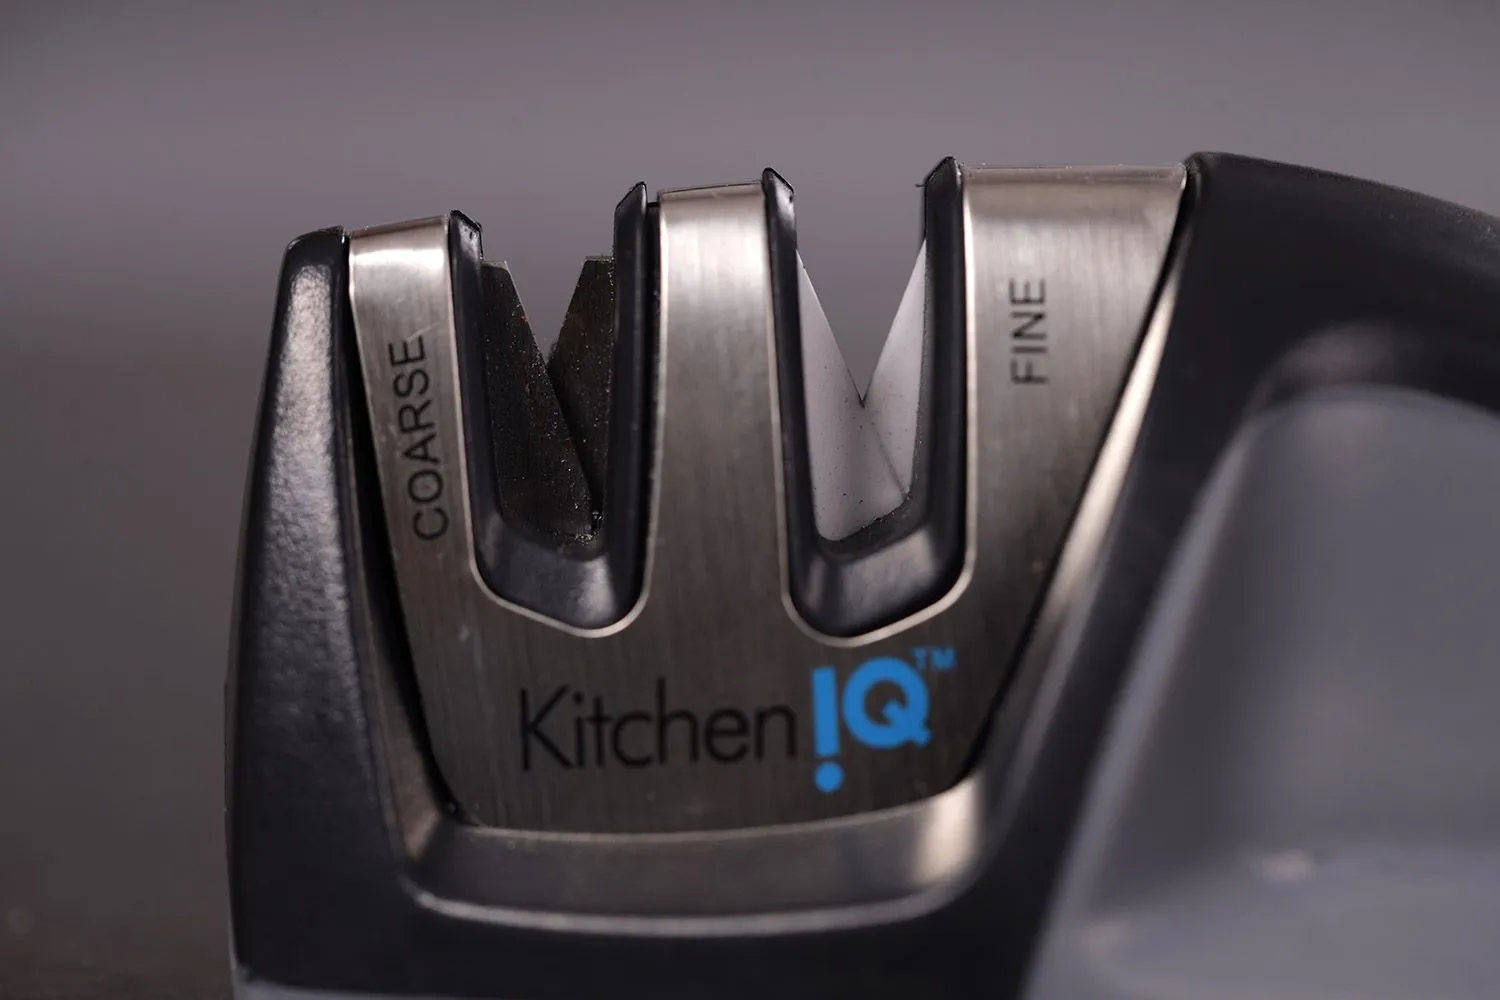 Kitchen IQ Edge Grip 2 Stage Knife Sharpener Kitchen Knife Sharpening 50009